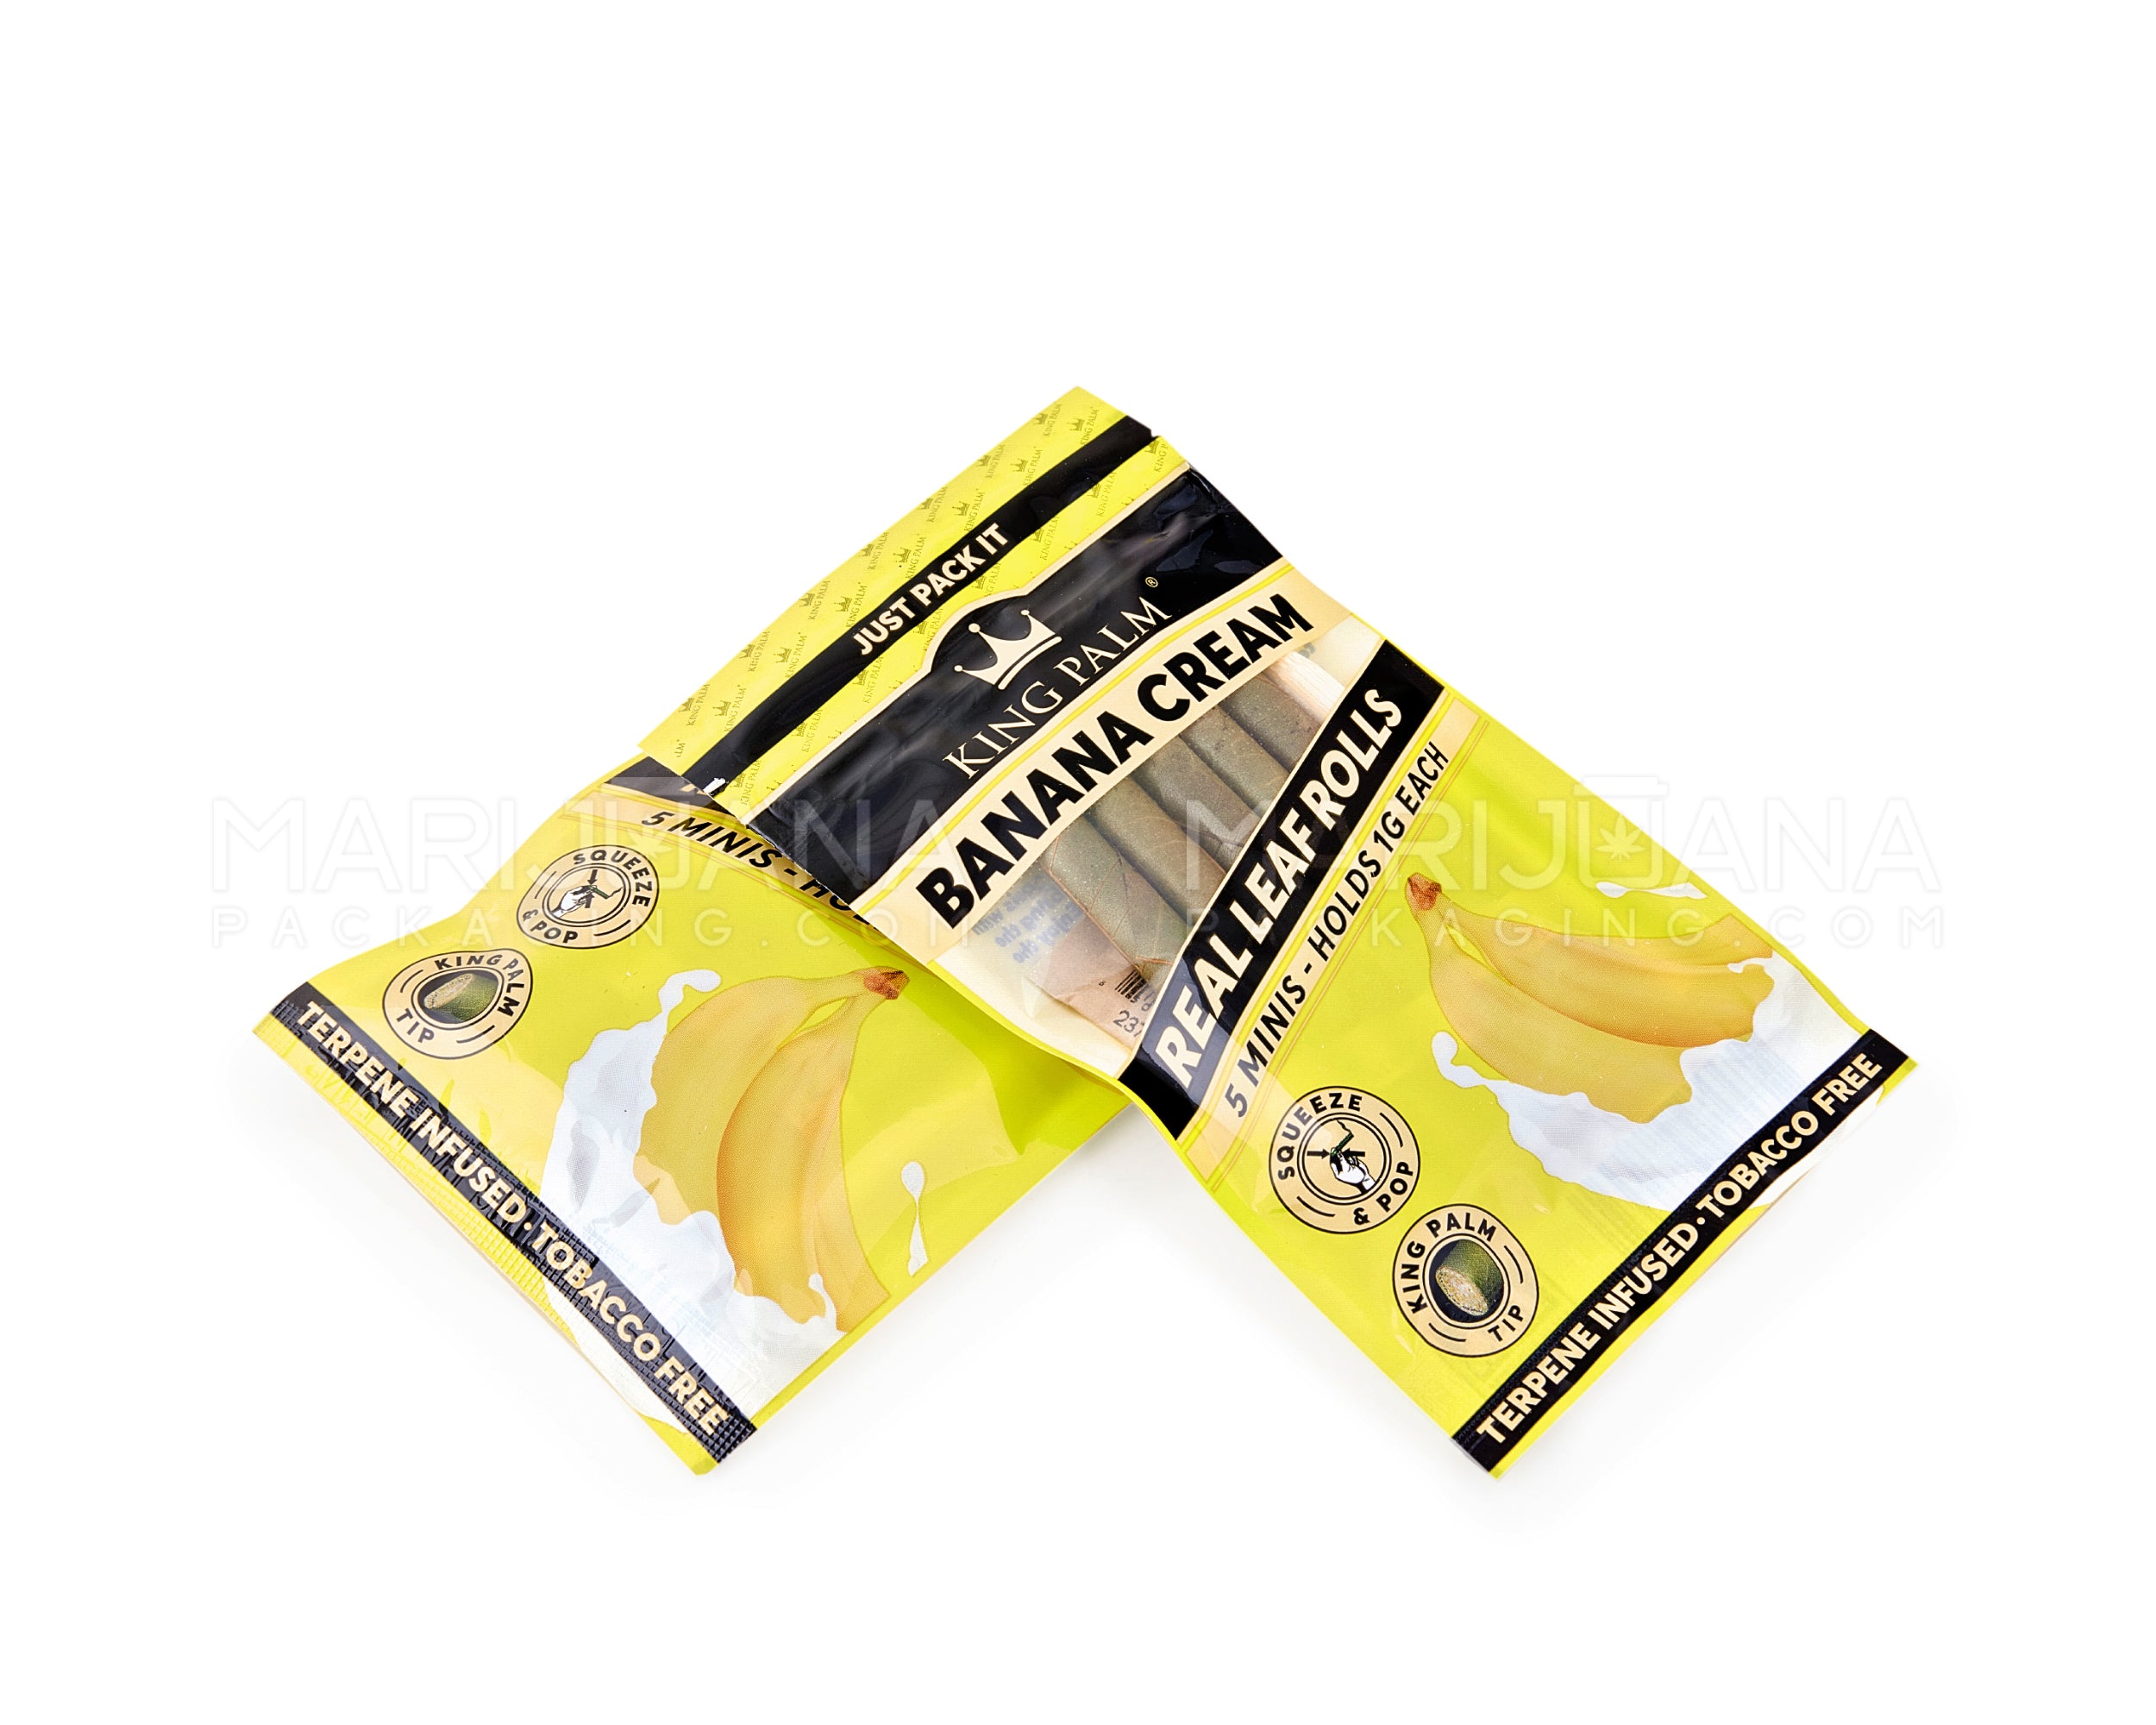 KING PALM | 'Retail Display' Mini Green Natural Leaf Blunt Wraps | 84mm - Banana Cream - 15 Count